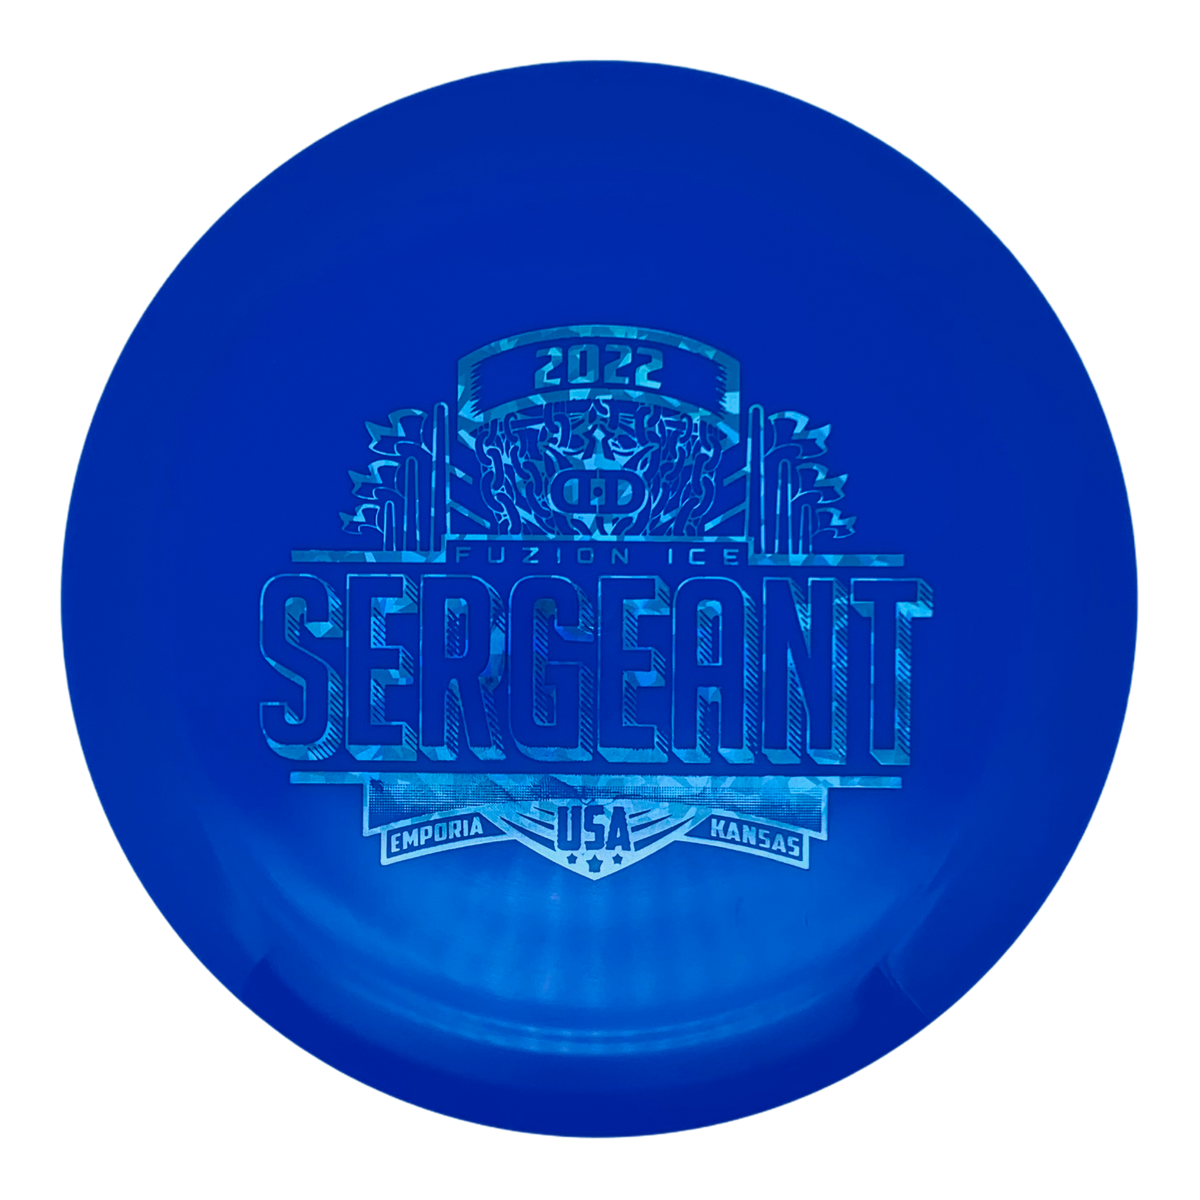 Dynamic Discs Fuzion Ice Sergeant - Worlds 2022 Fundraiser